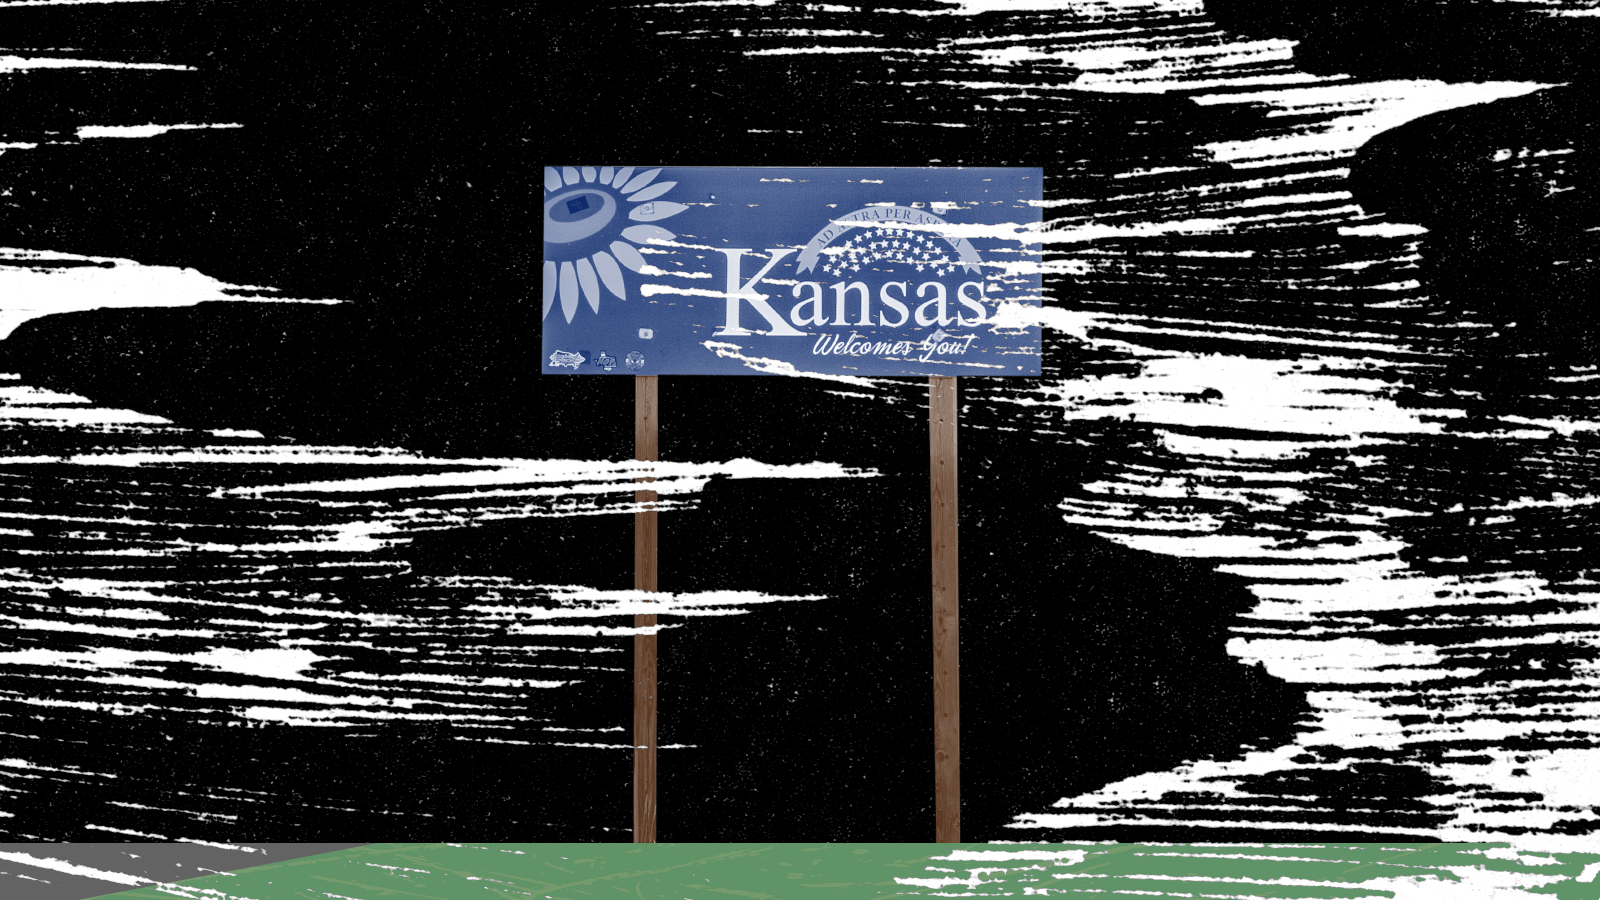 Kansas.